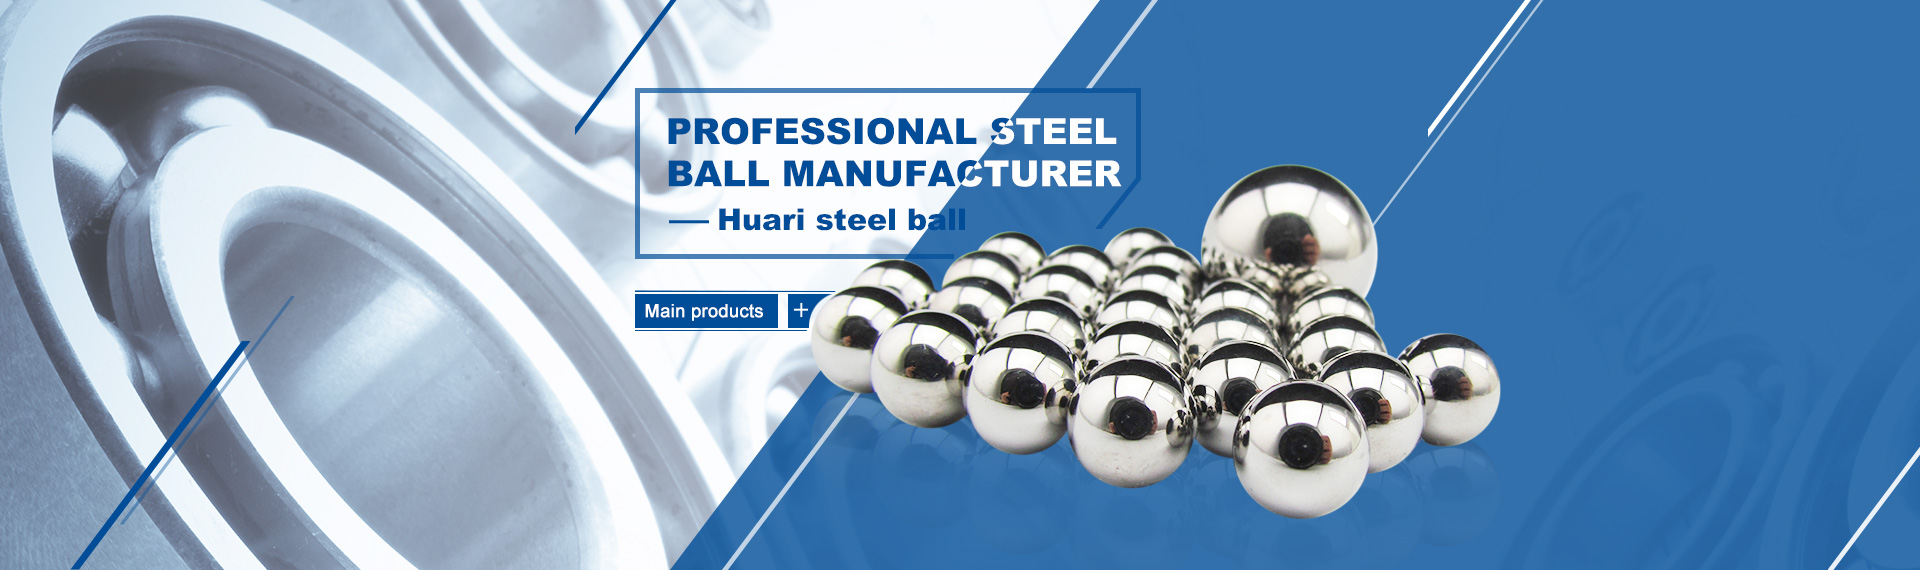 professional steel ball manufacturer